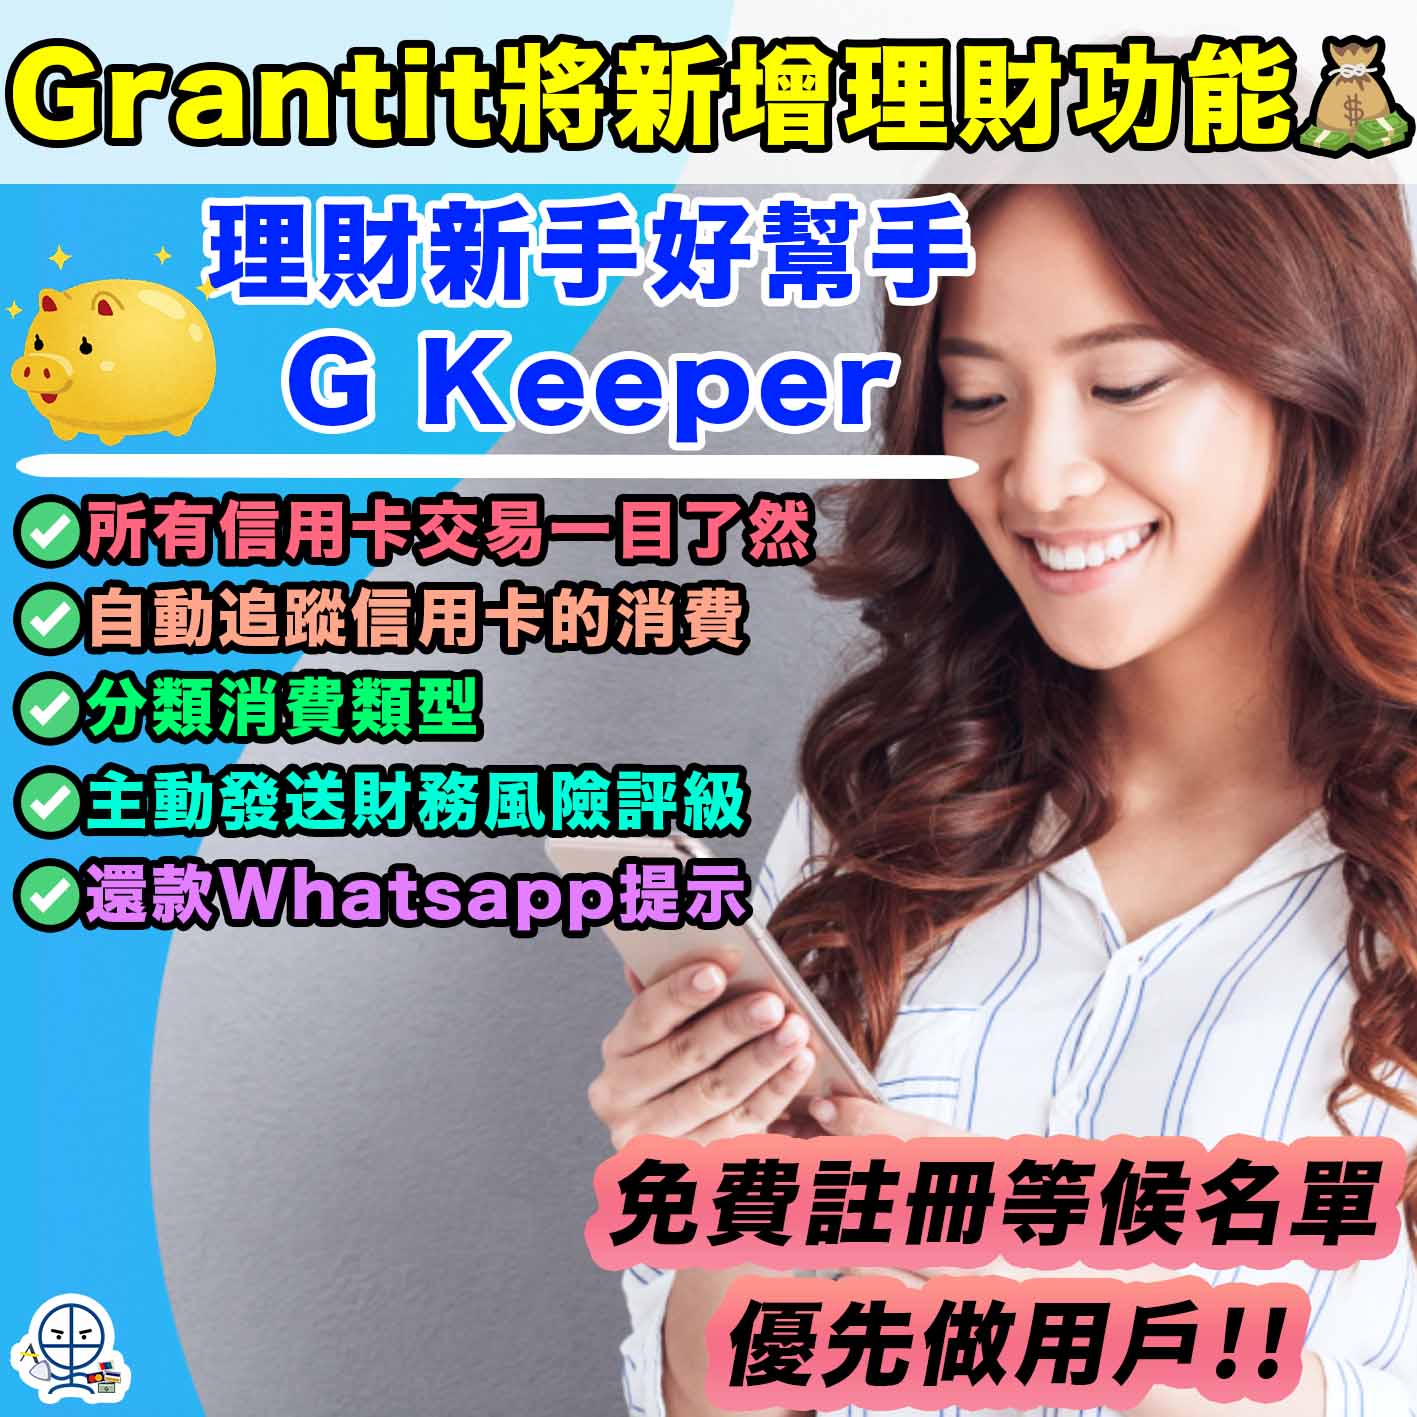 Grantit-理財App-理財新手-G.KEEPER